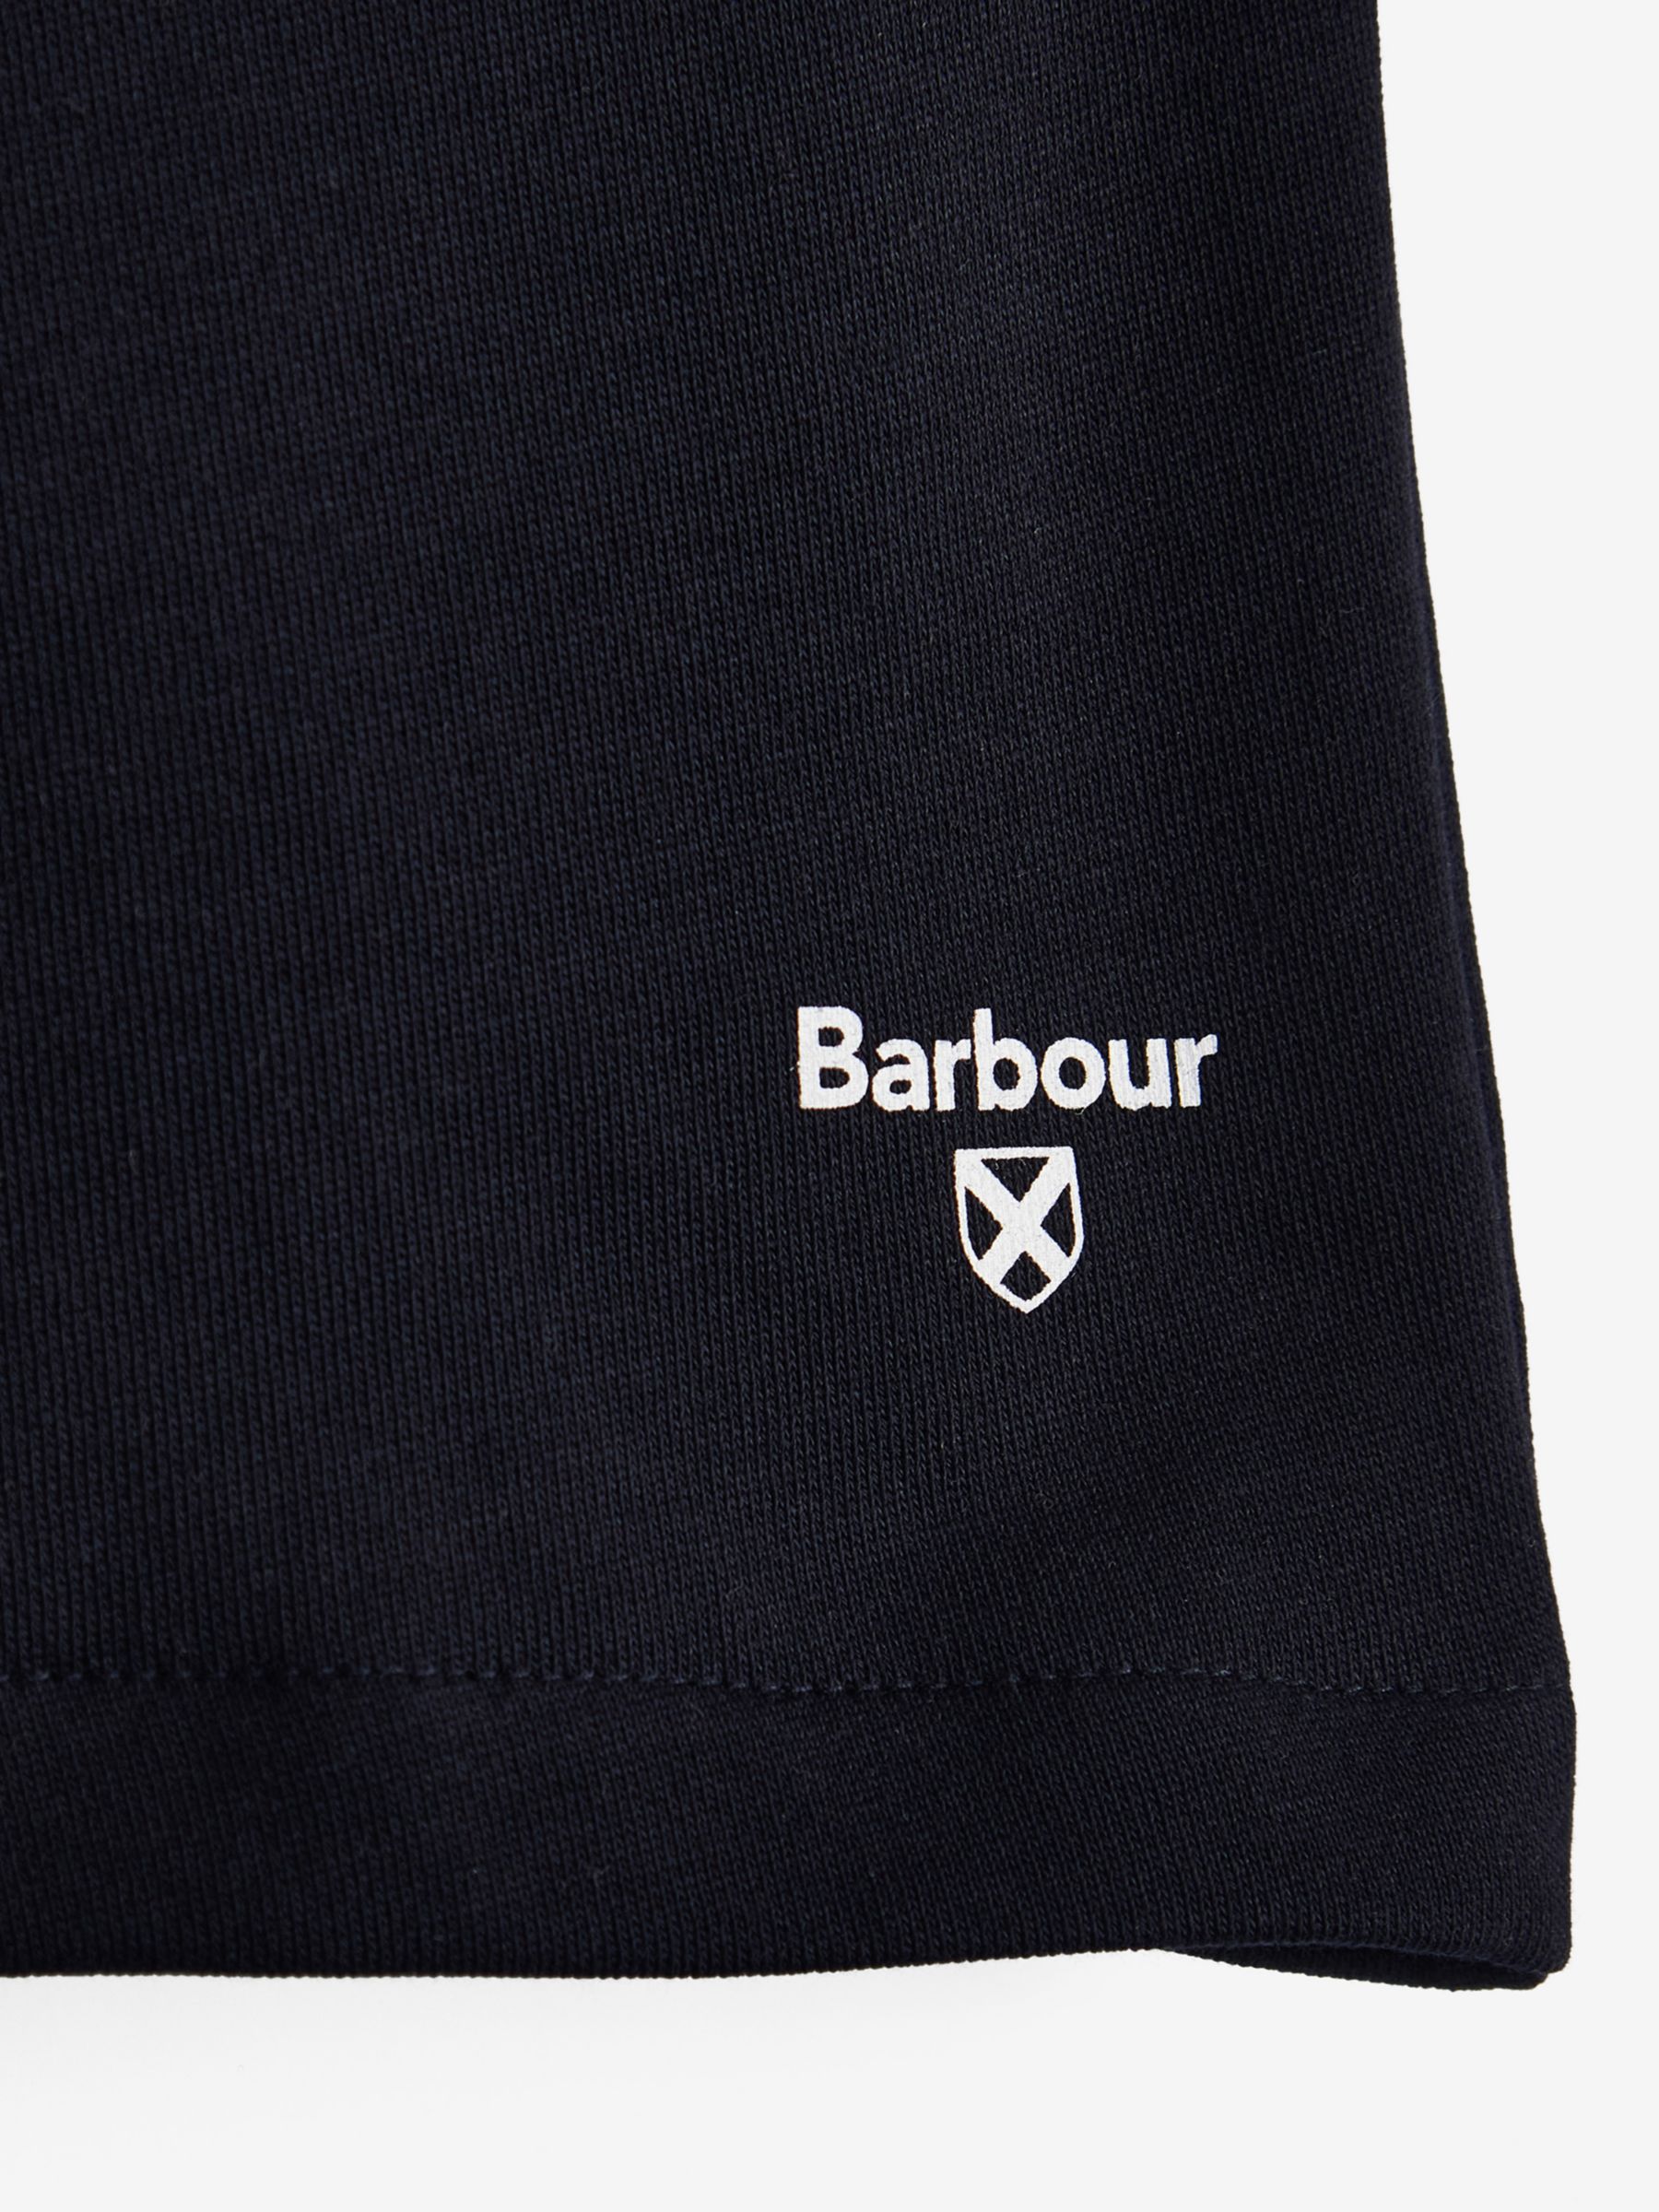 Barbour Kids' Essentials T-Shirt & Shorts Set, White/Multi, XL